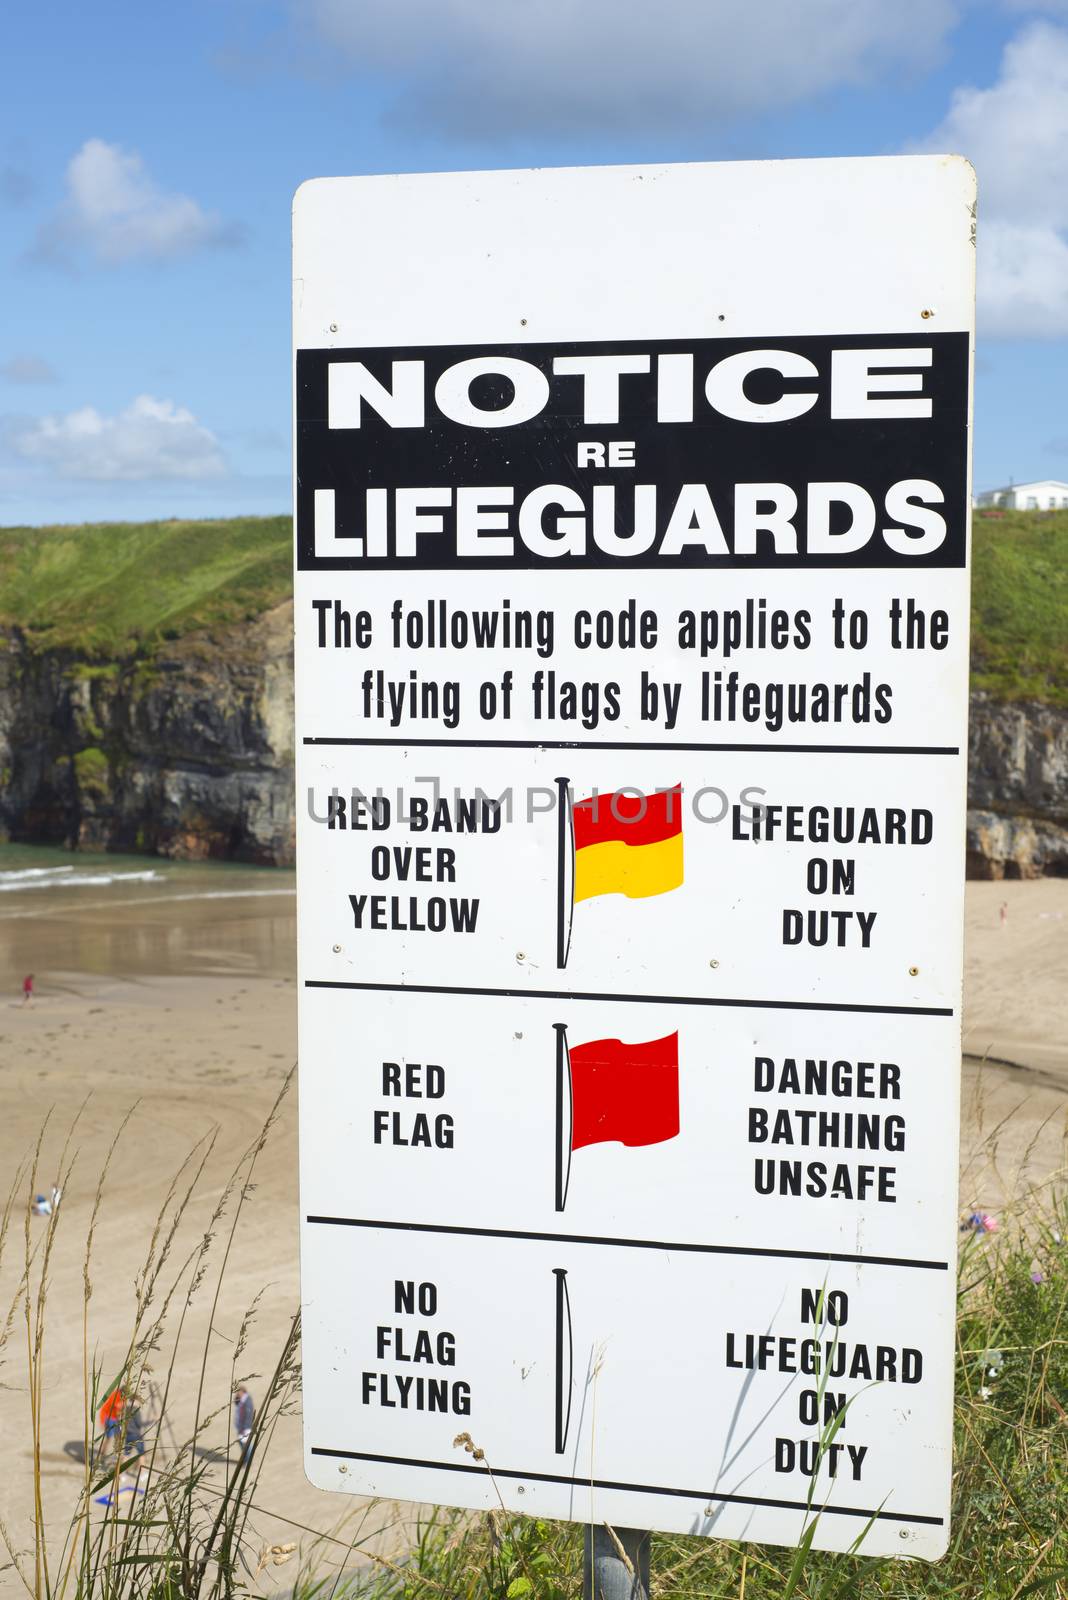 lifeguards notice at ballybunion beach in county kerry ireland on the wild atlantic way